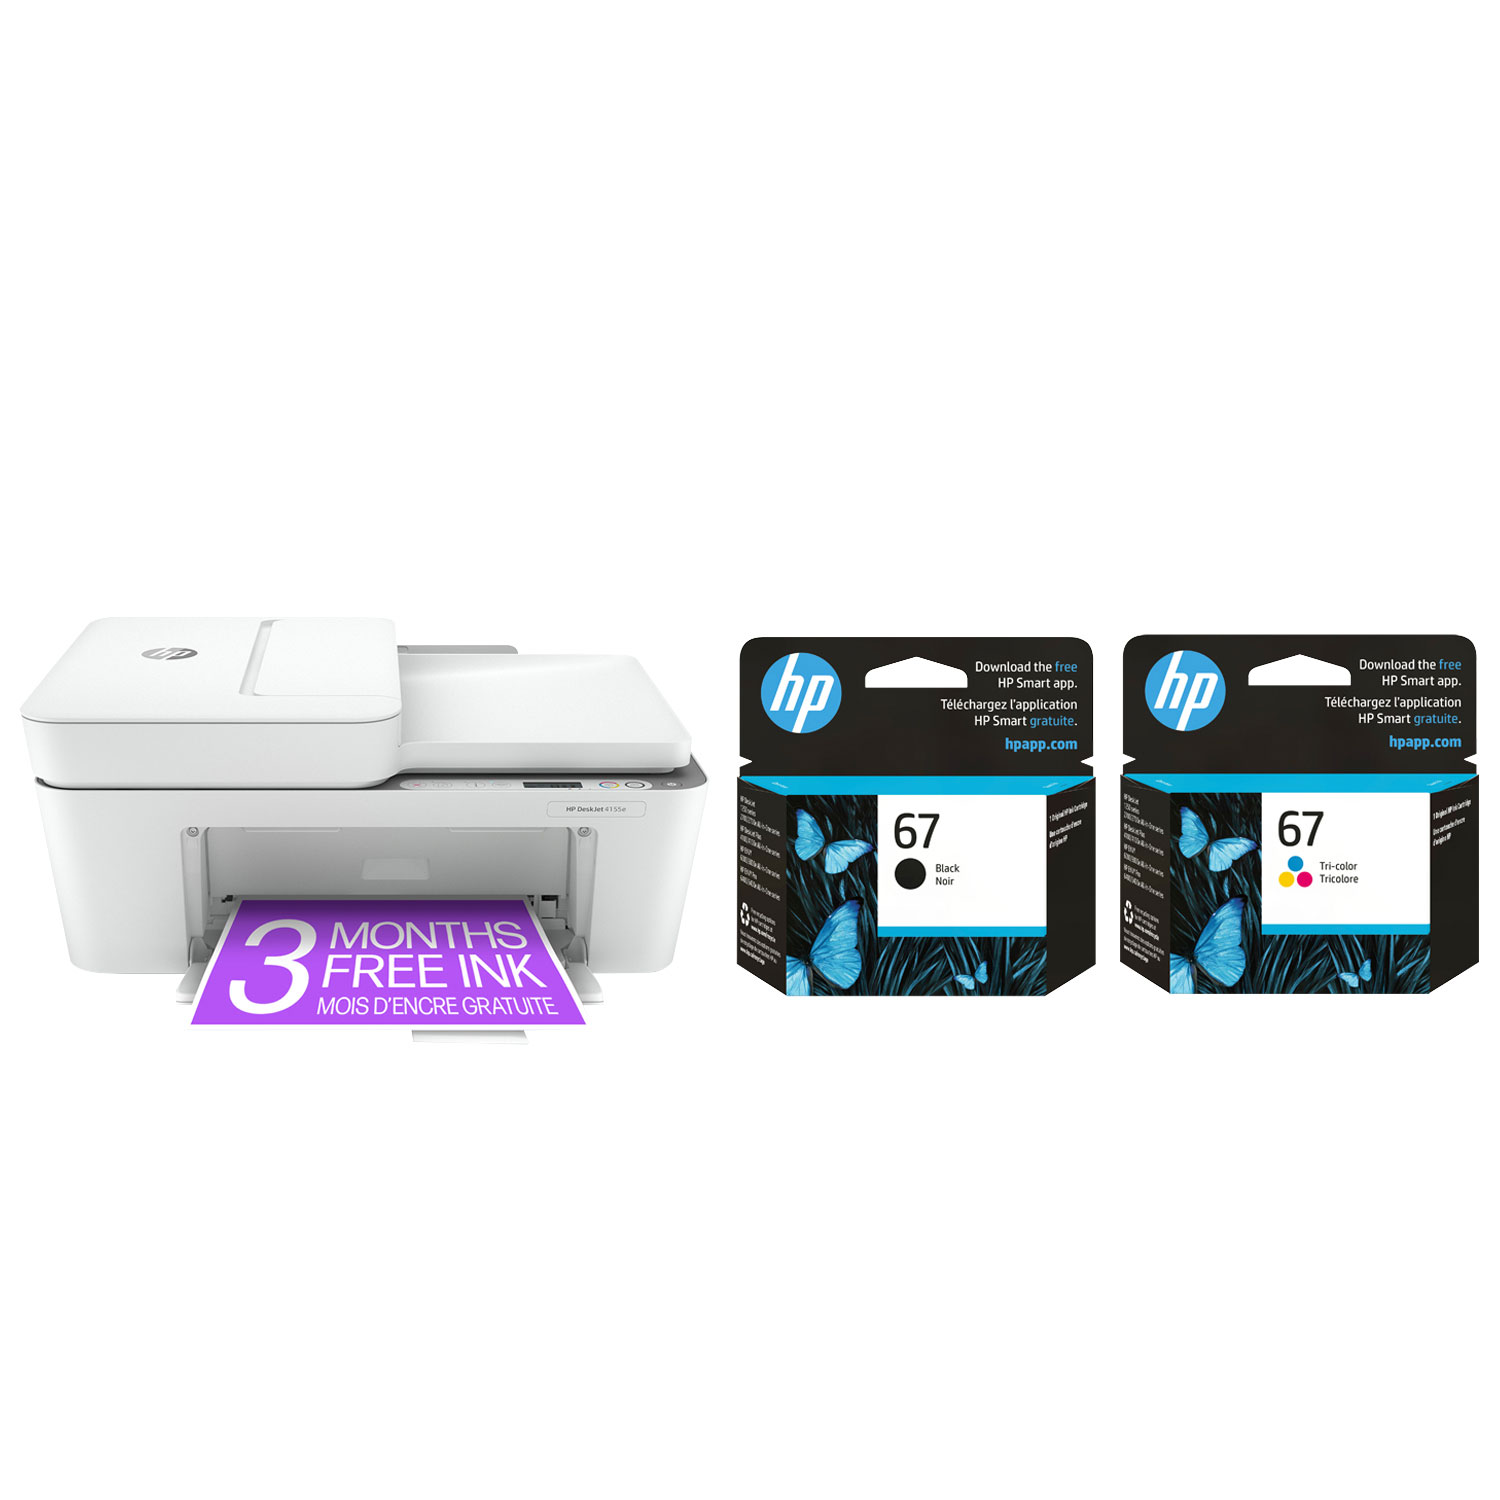 HP DeskJet 4155e Wireless All-In-One Inkjet Printer with HP 67 Black & Tri-Colour Ink